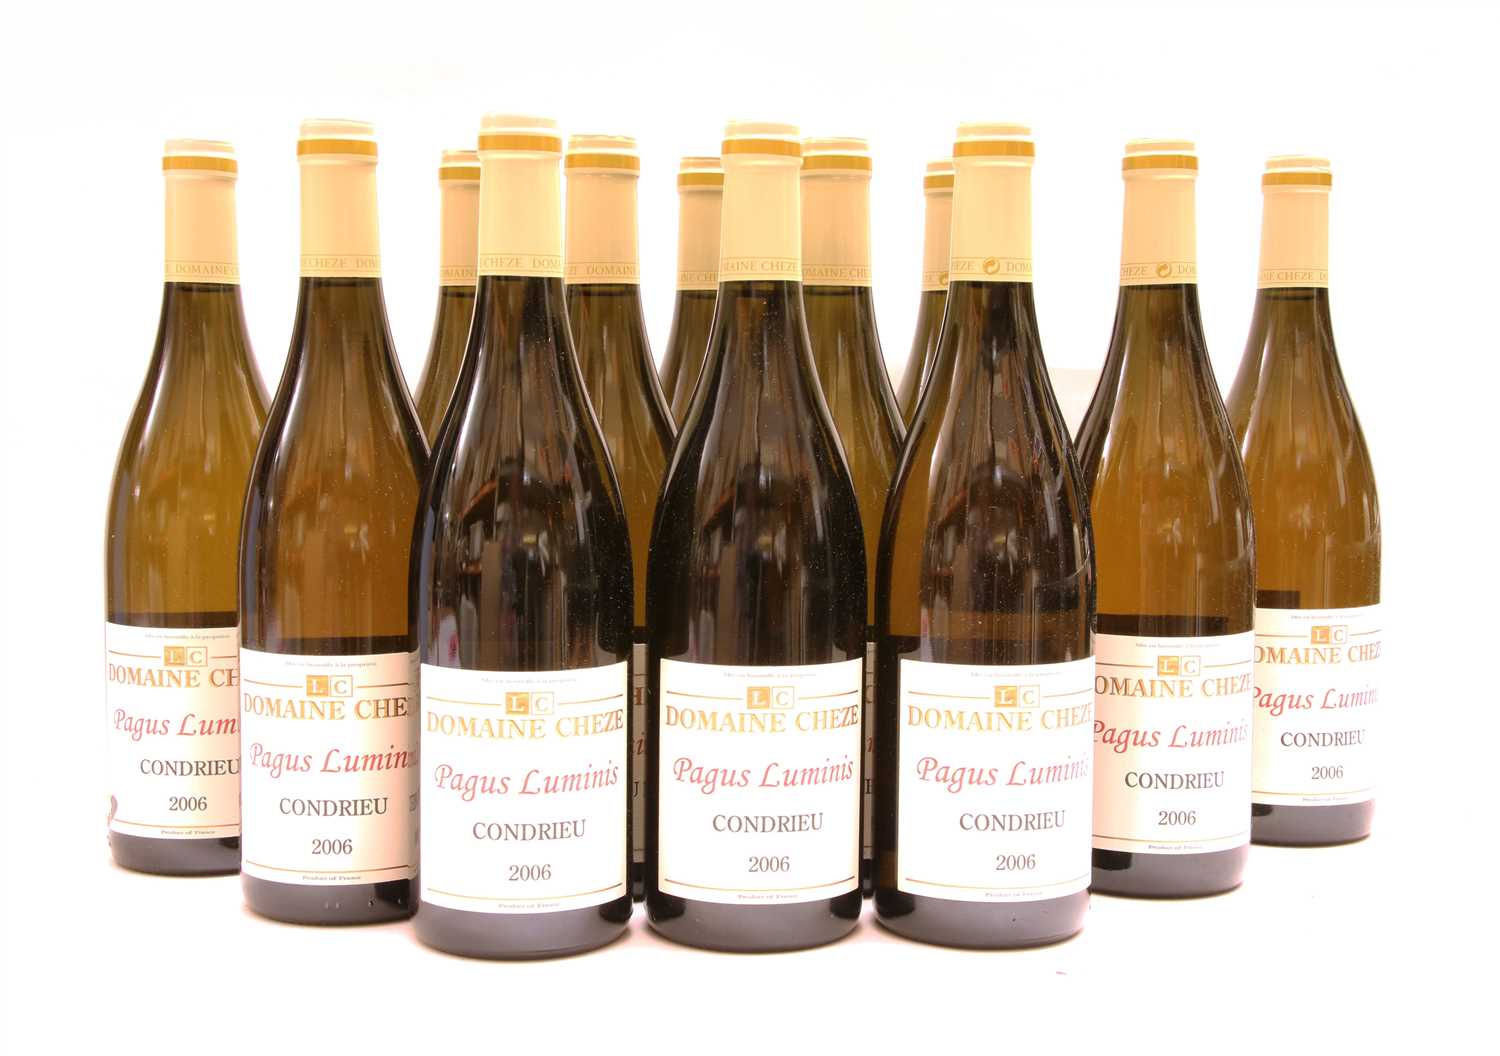 Lot 8 - Domaine Cheze, Pagus Luminis, Condrieu, 2006, twelve bottles (two boxes of six)